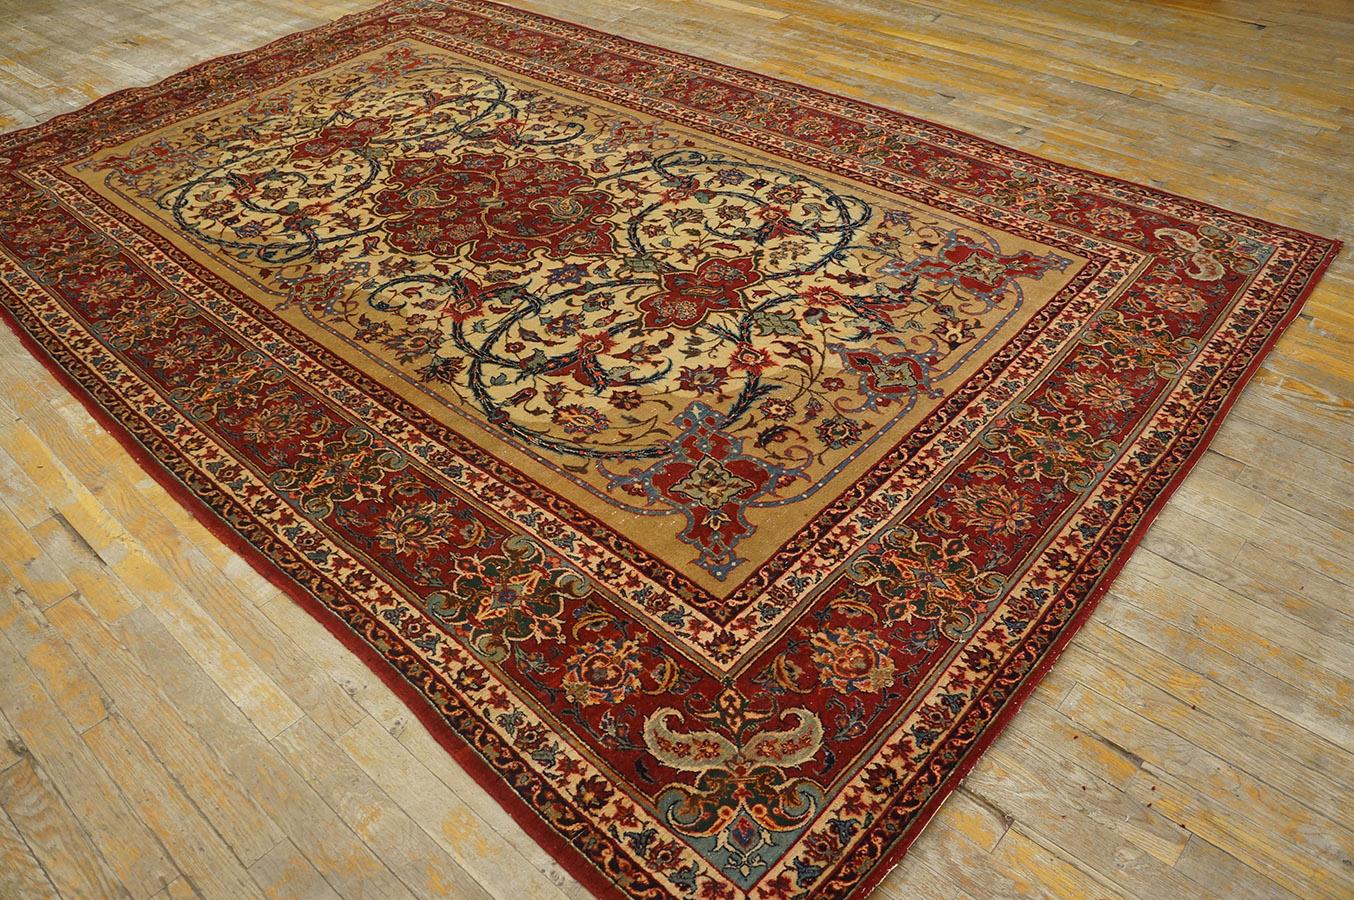 rug from big lebowski